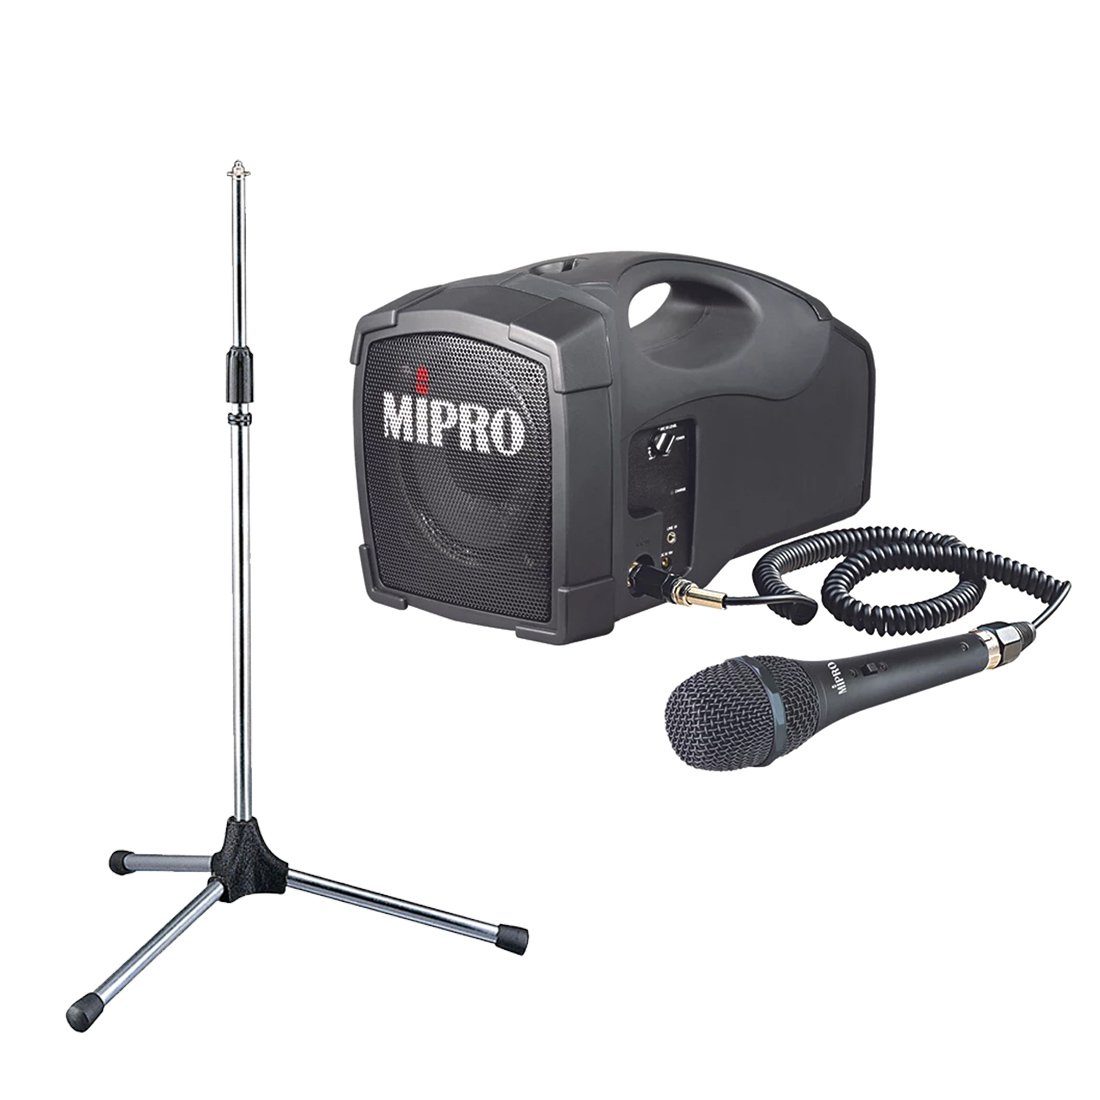 Mipro Audio Mikrofon MA-101C Lautsprecher mit Mikrofon mit Stativ